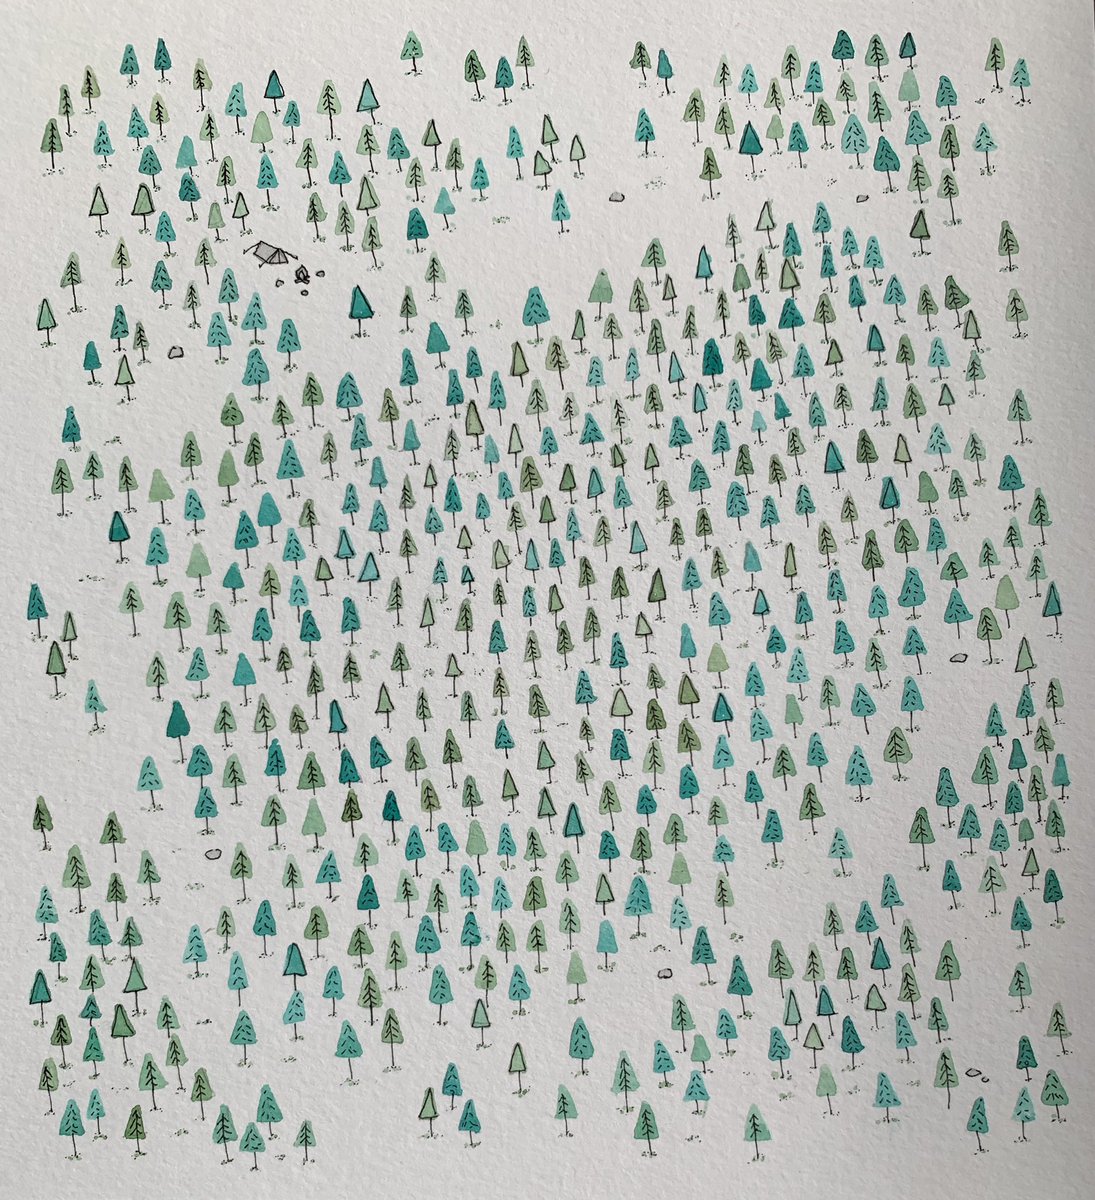 Happy Friday #colour_collective #LushMeadow #illustration #illustrator #kidlit #kidlitartist #picturebook #picturebookartist #scbwiillustrators #womeninillustration #trees #camp #camping #patterning #cortneybenvenutoillustration